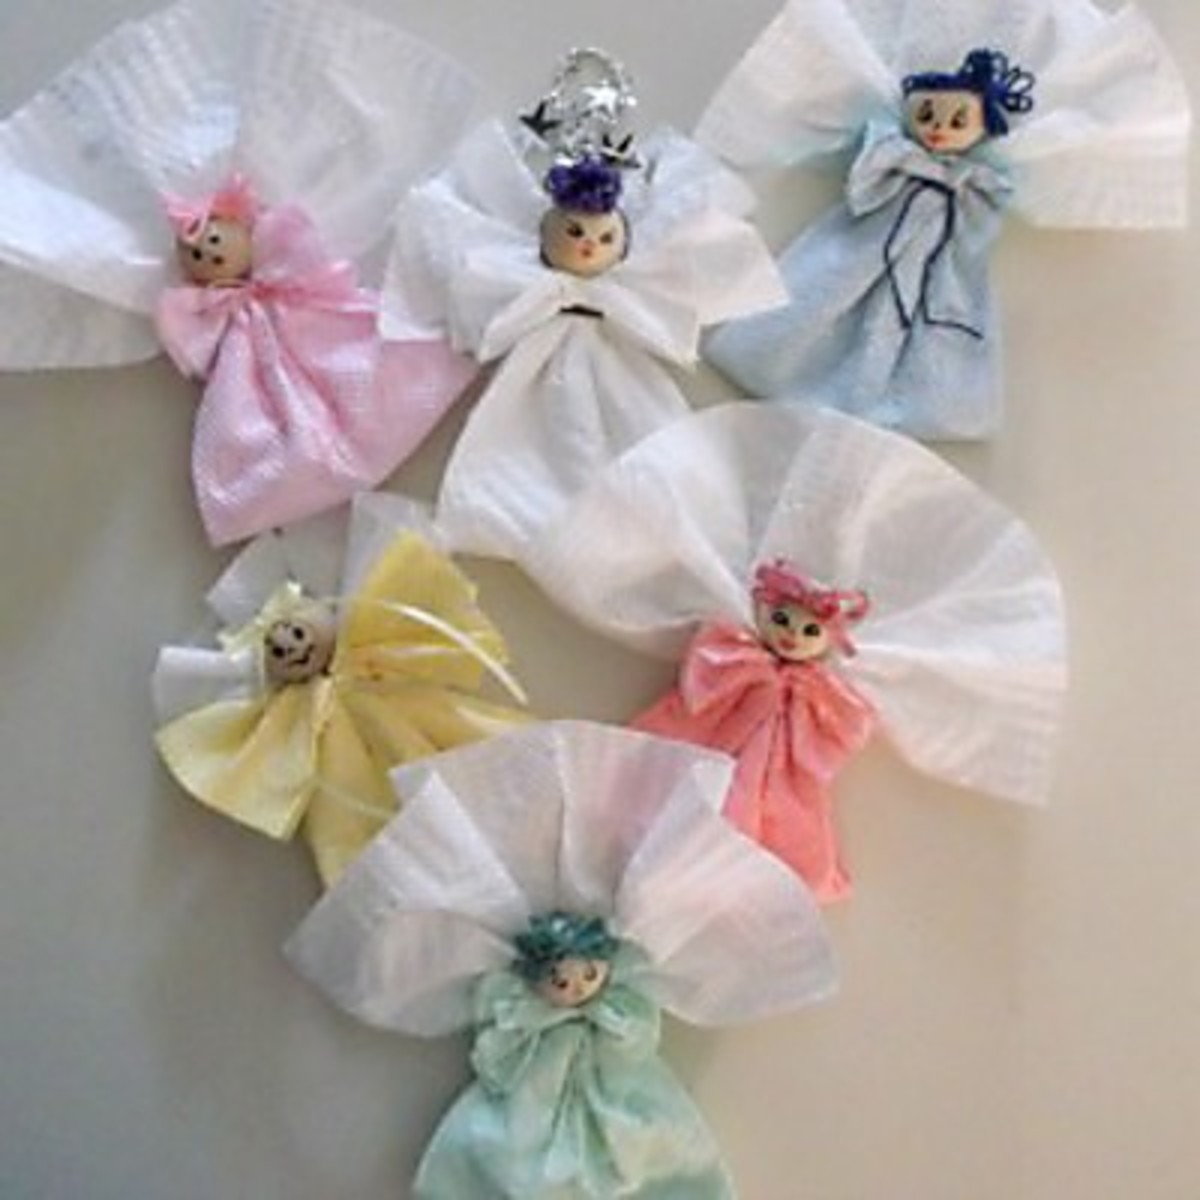 make-doll-ornaments-using-paper-towels